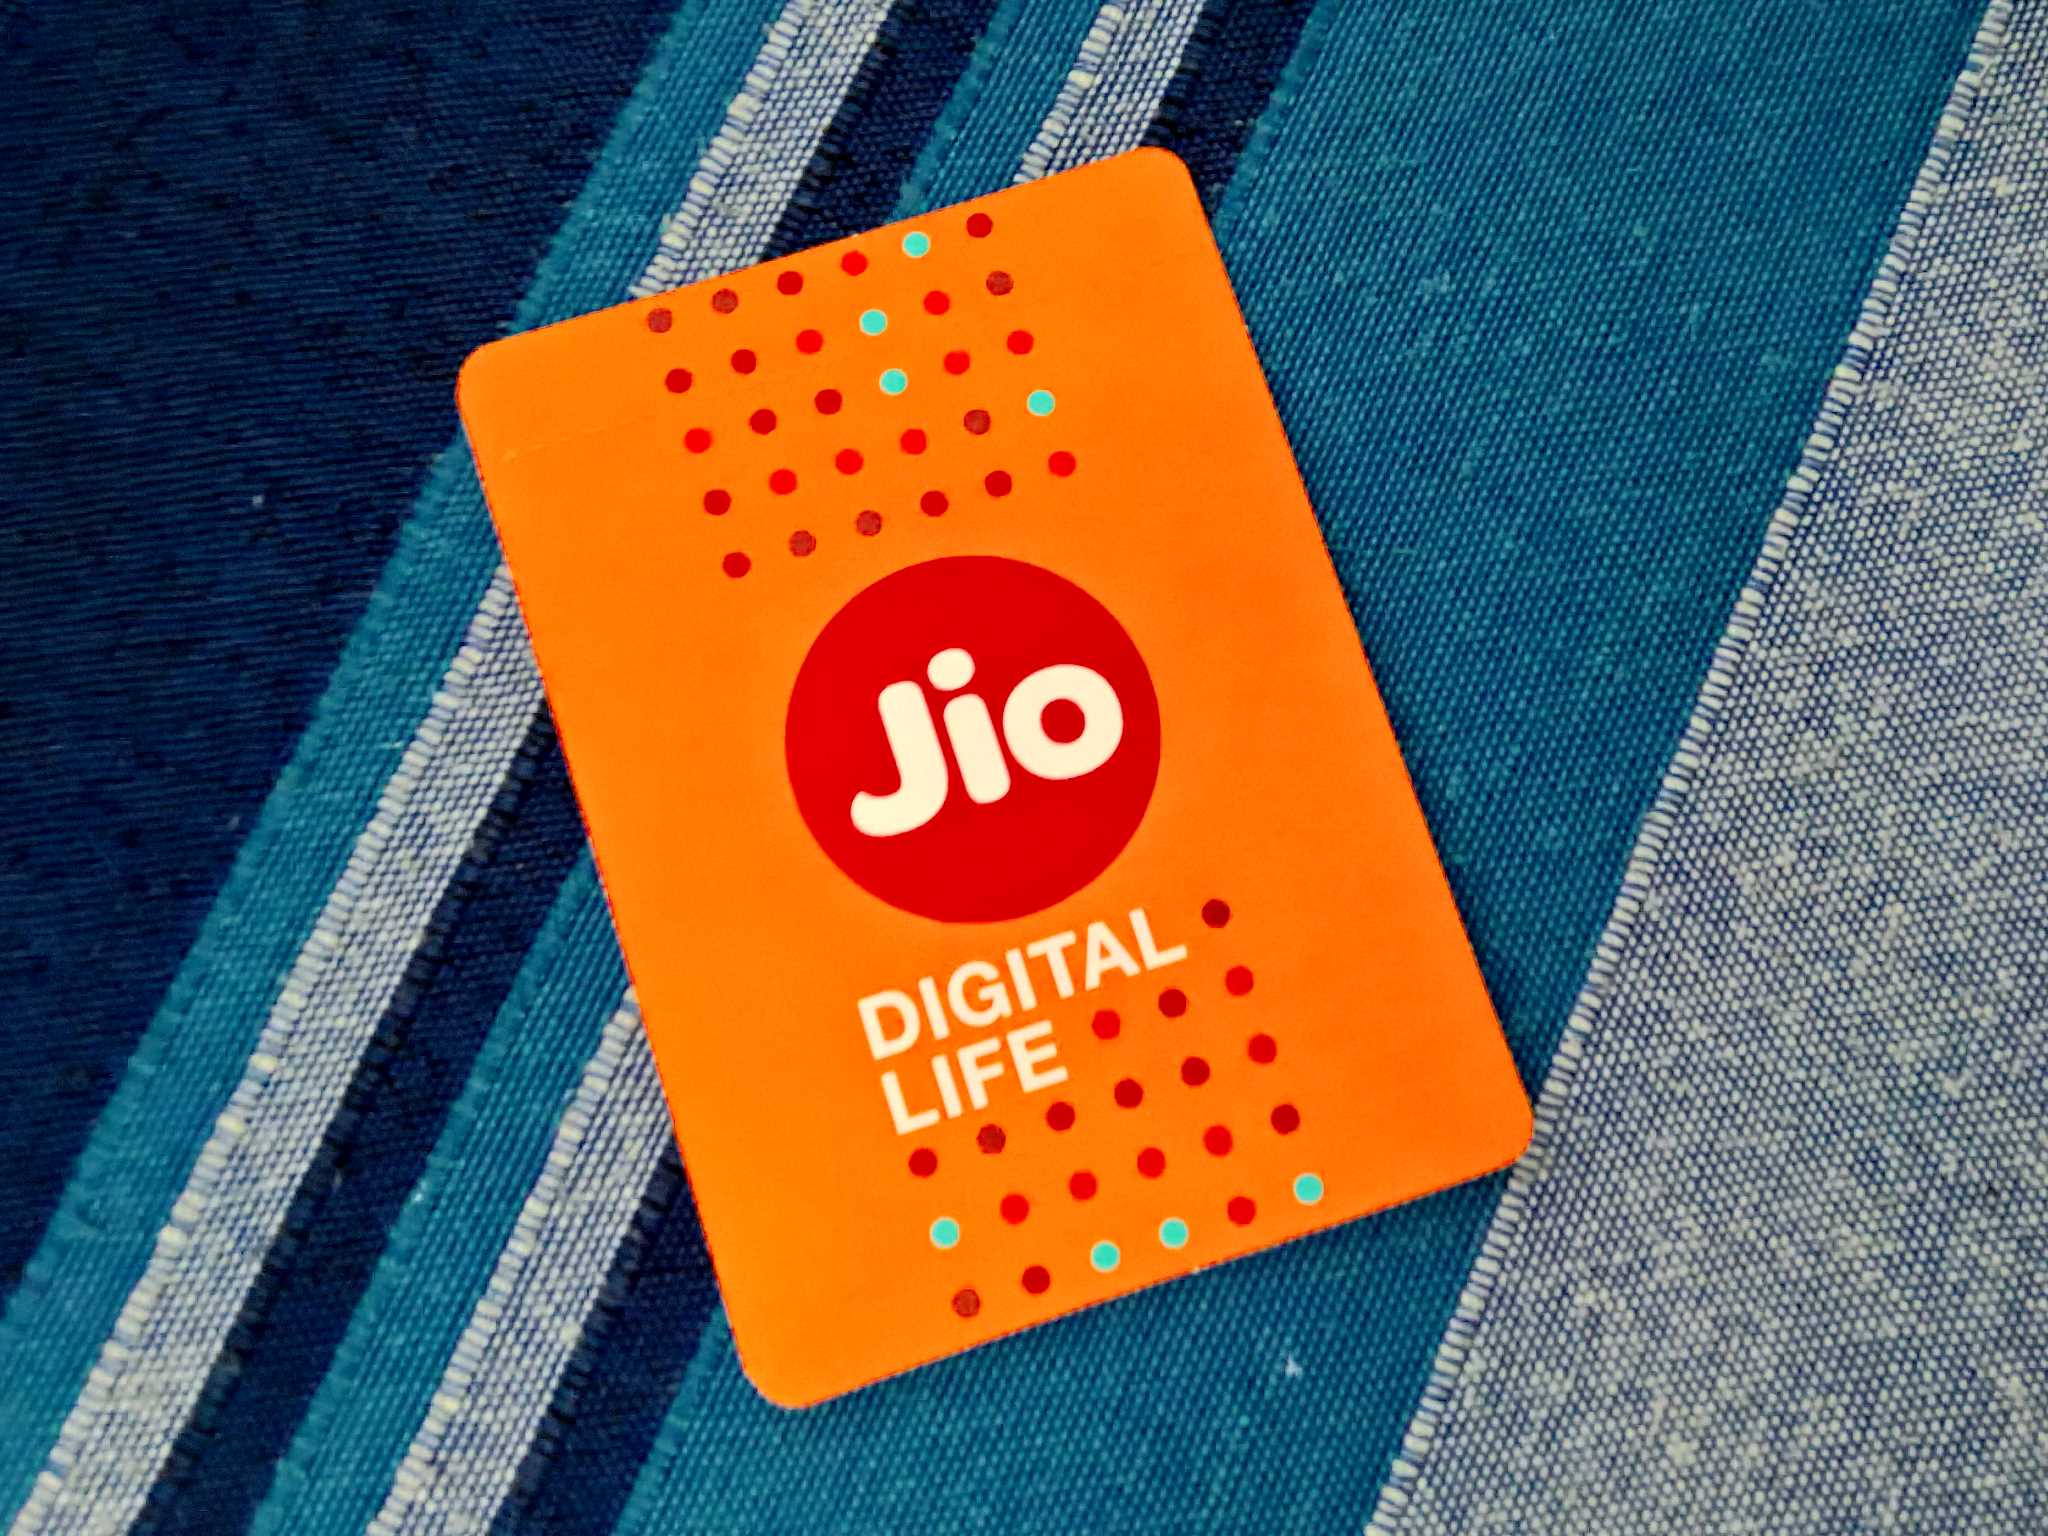 reliance jio digital life card